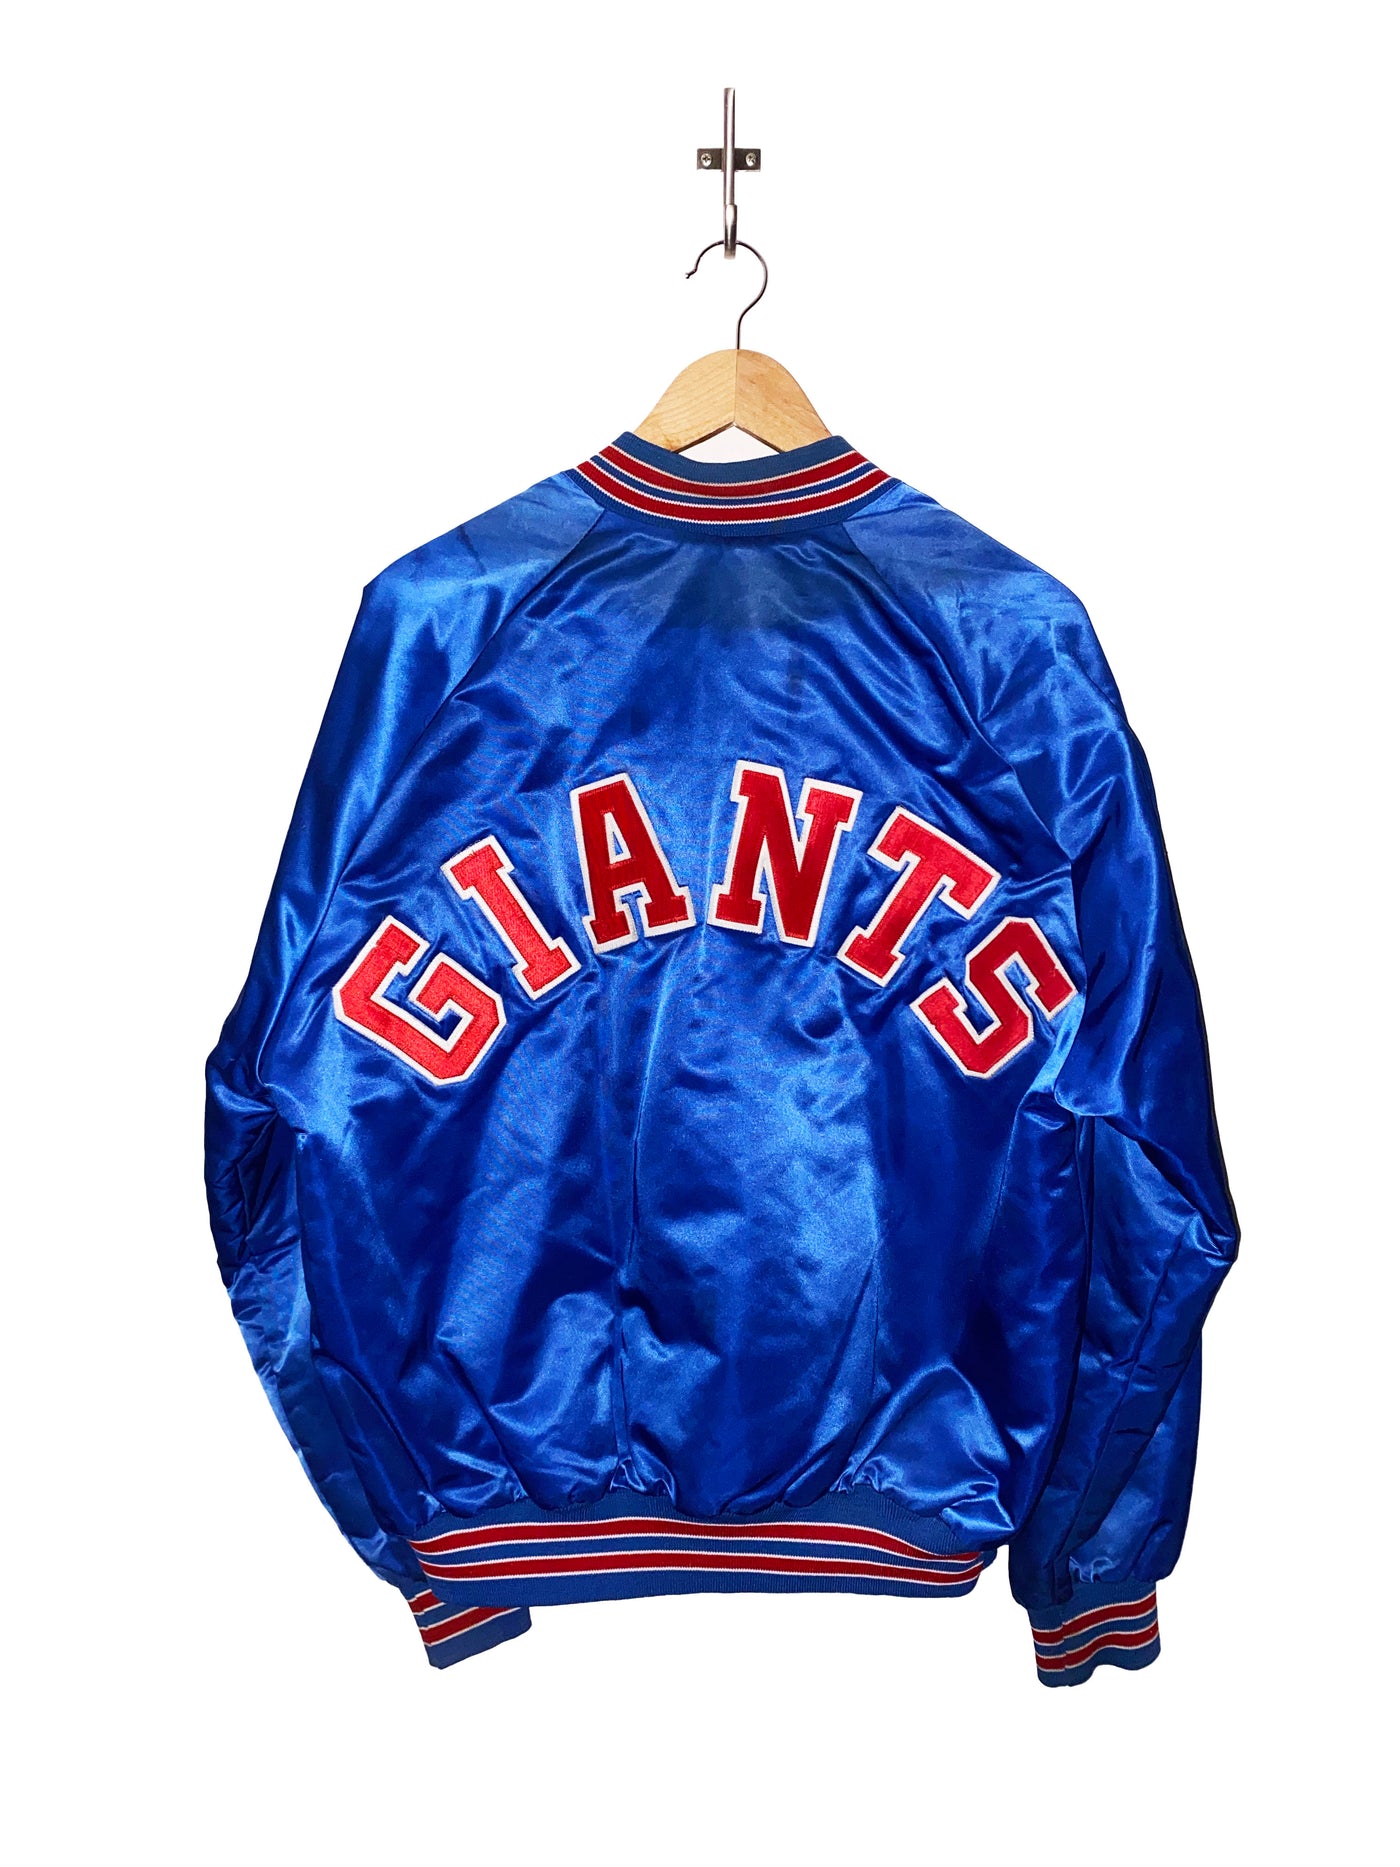 Vintage Chalkline New York Giants Jacket